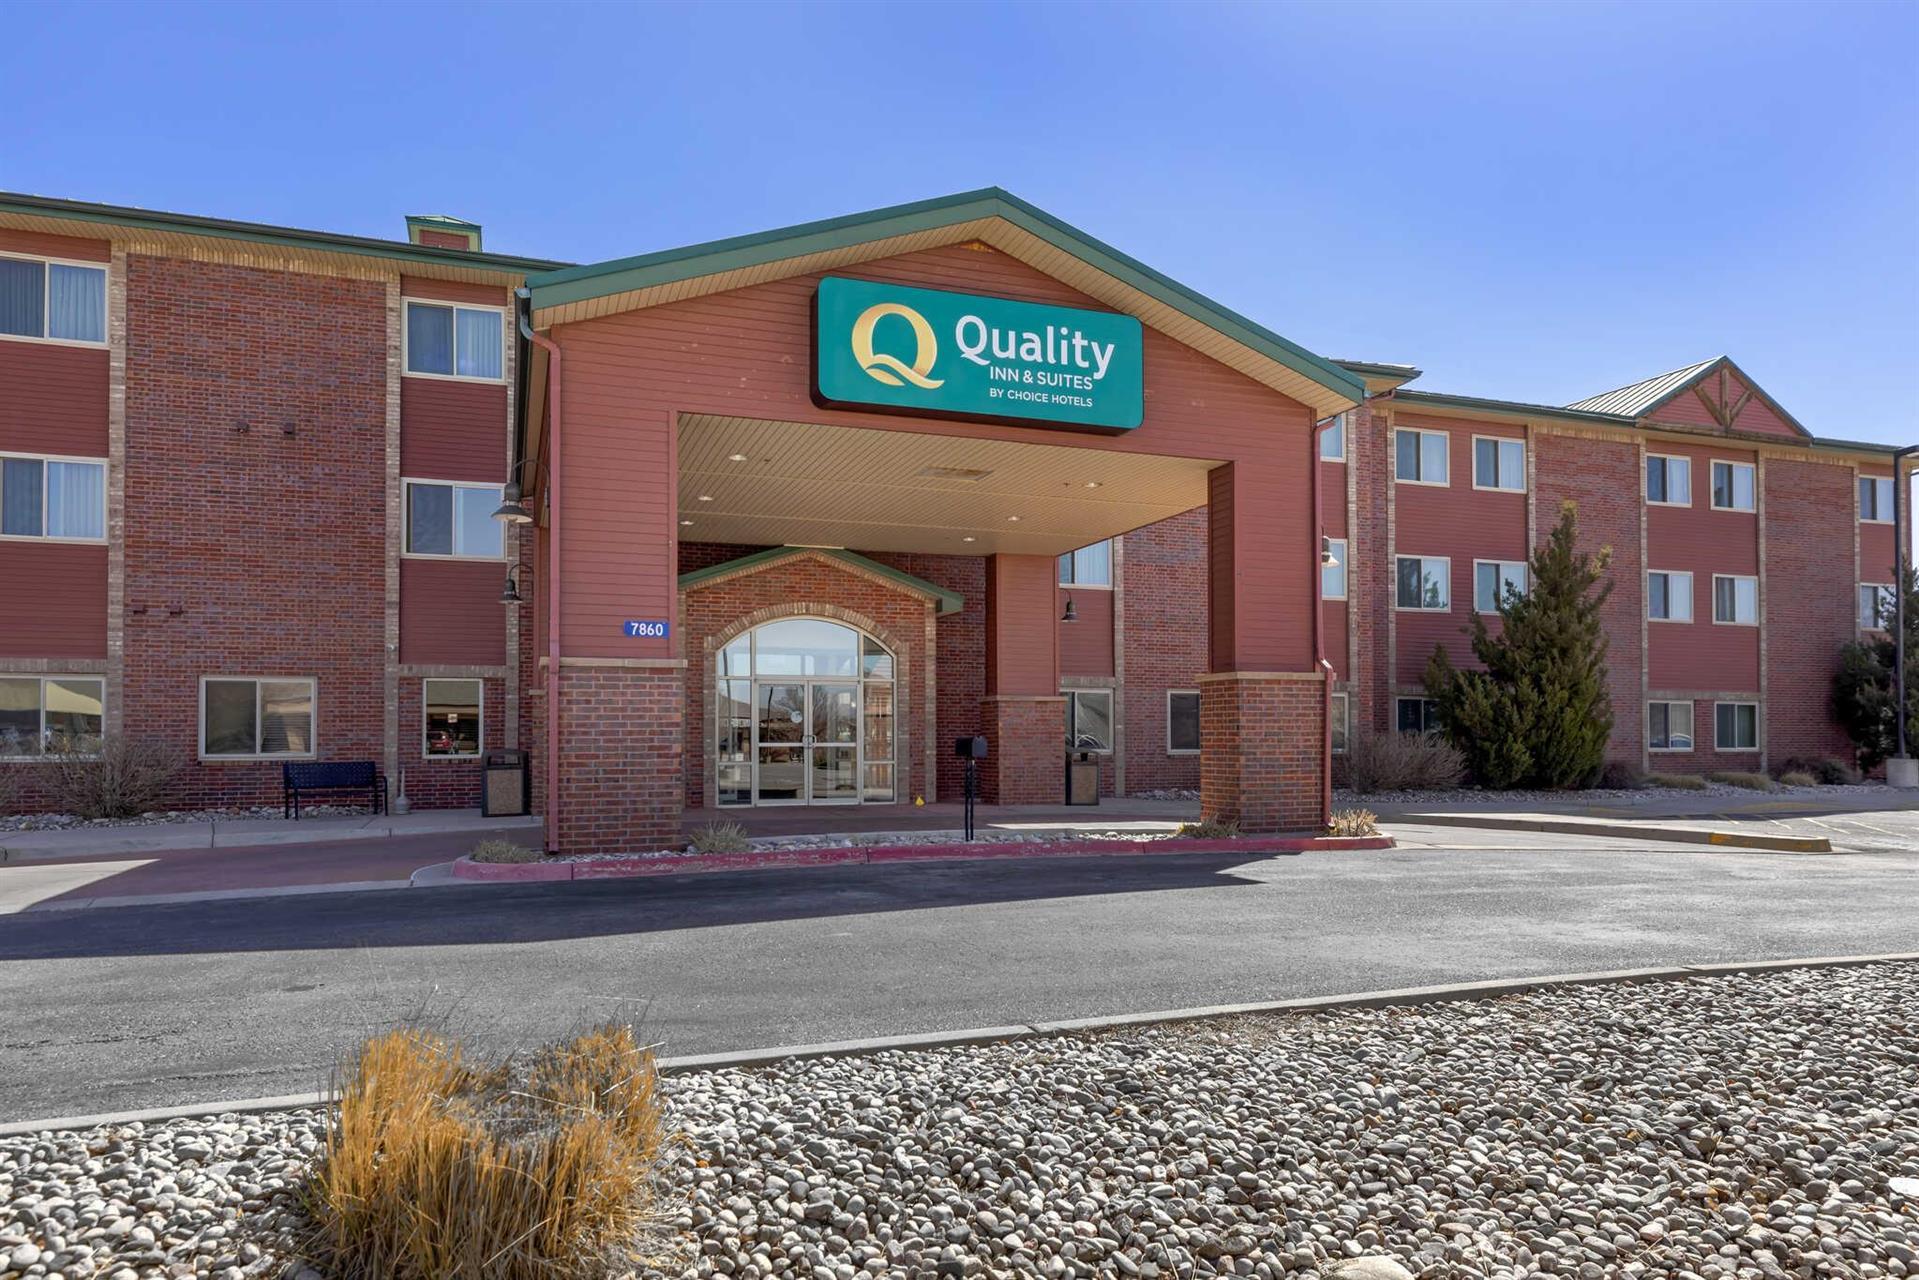 Quality Inn & Suites Wellington - Fort Collins in Wellington, CO